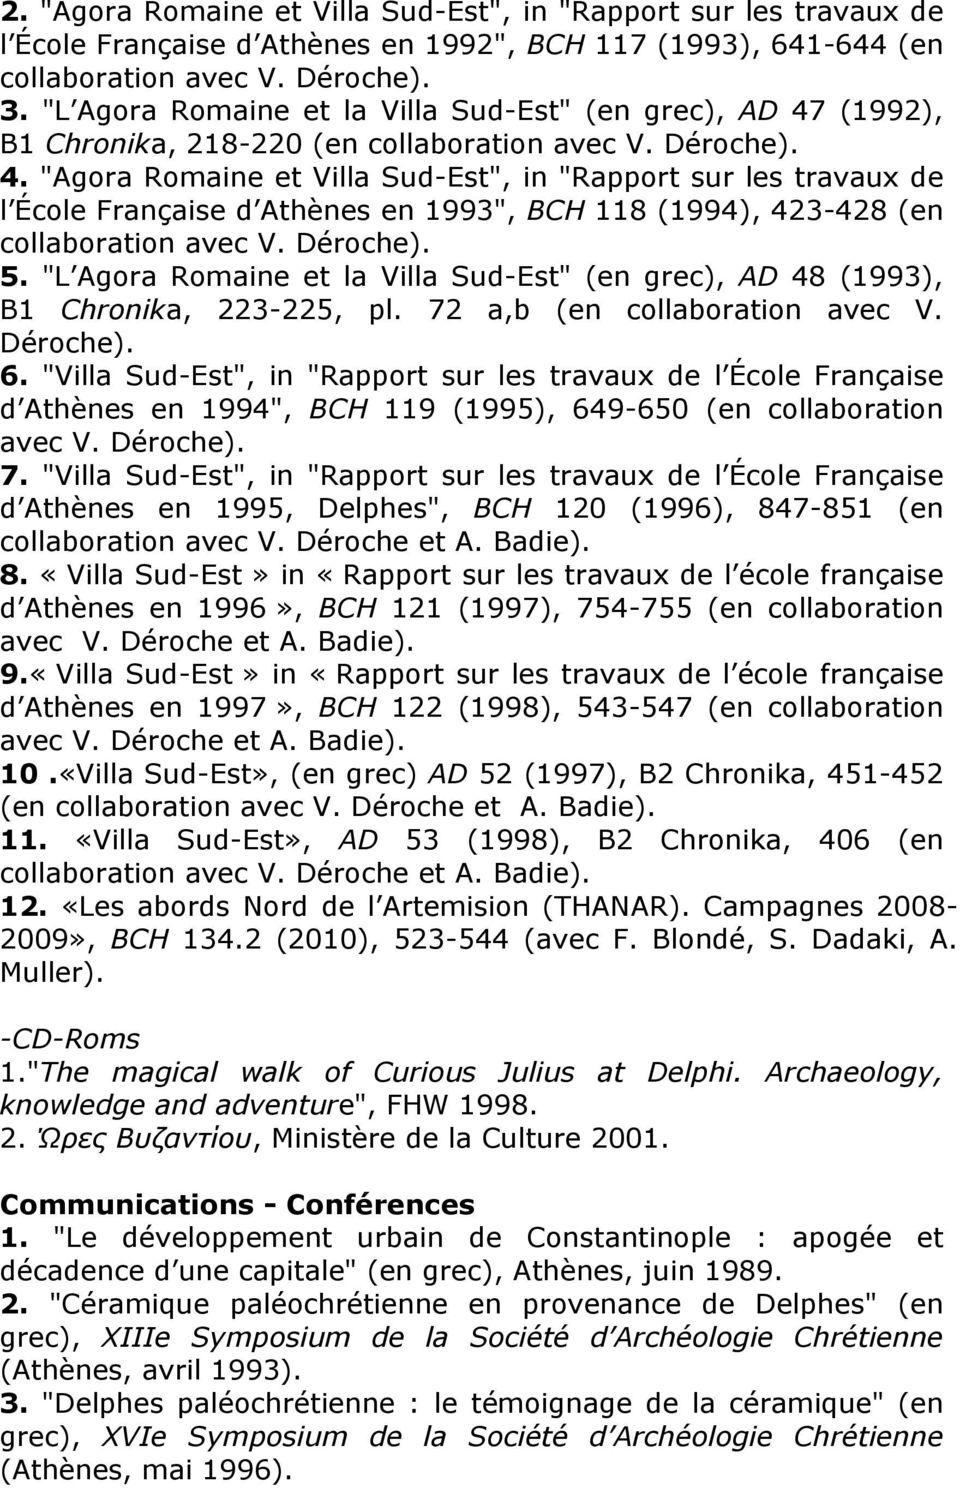 (1992), B1 Chronika, 218-220 (en collaboration avec V. Déroche). 4.